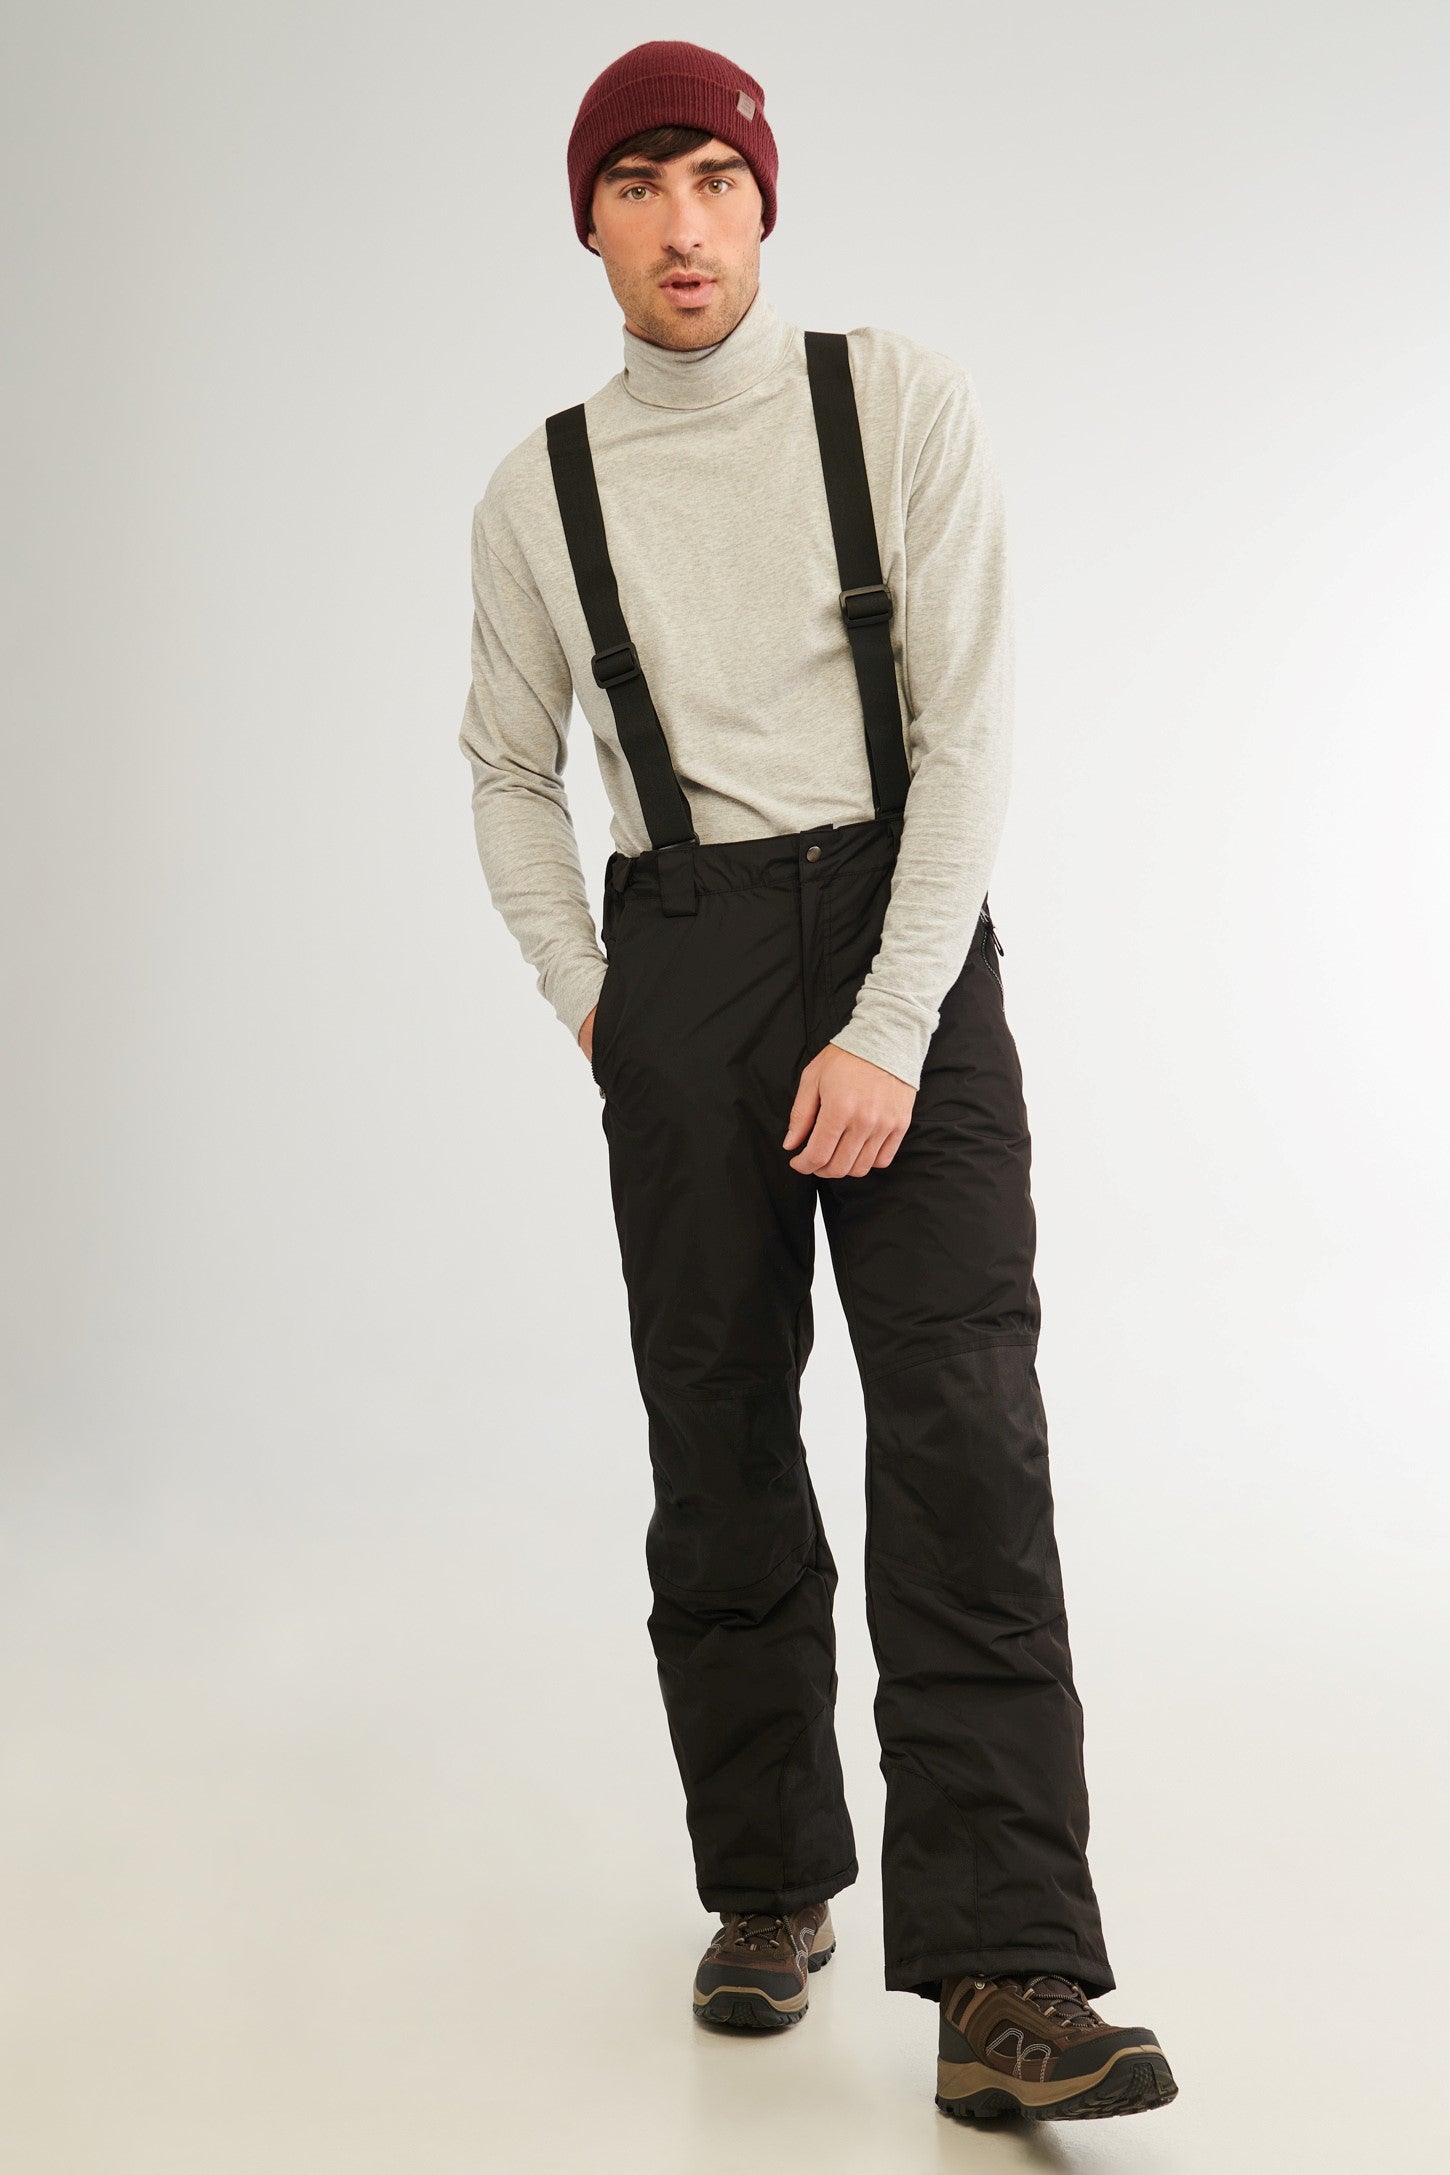 Y vs. X Back Suspenders: Which Is Better? - JJ Suspenders